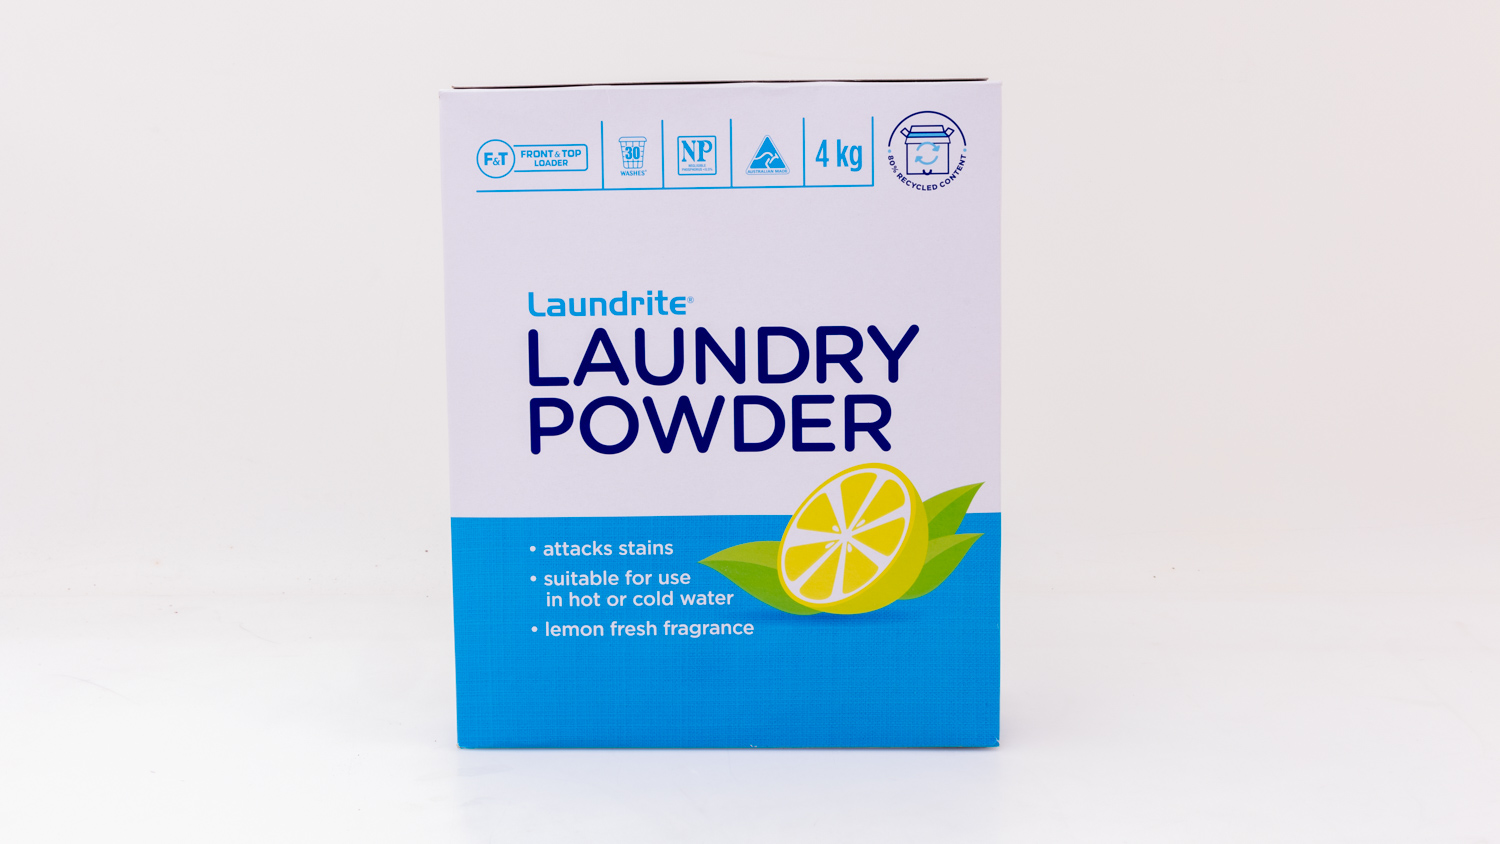 Aldi Laundrite Laundry Powder Front Loader carousel image